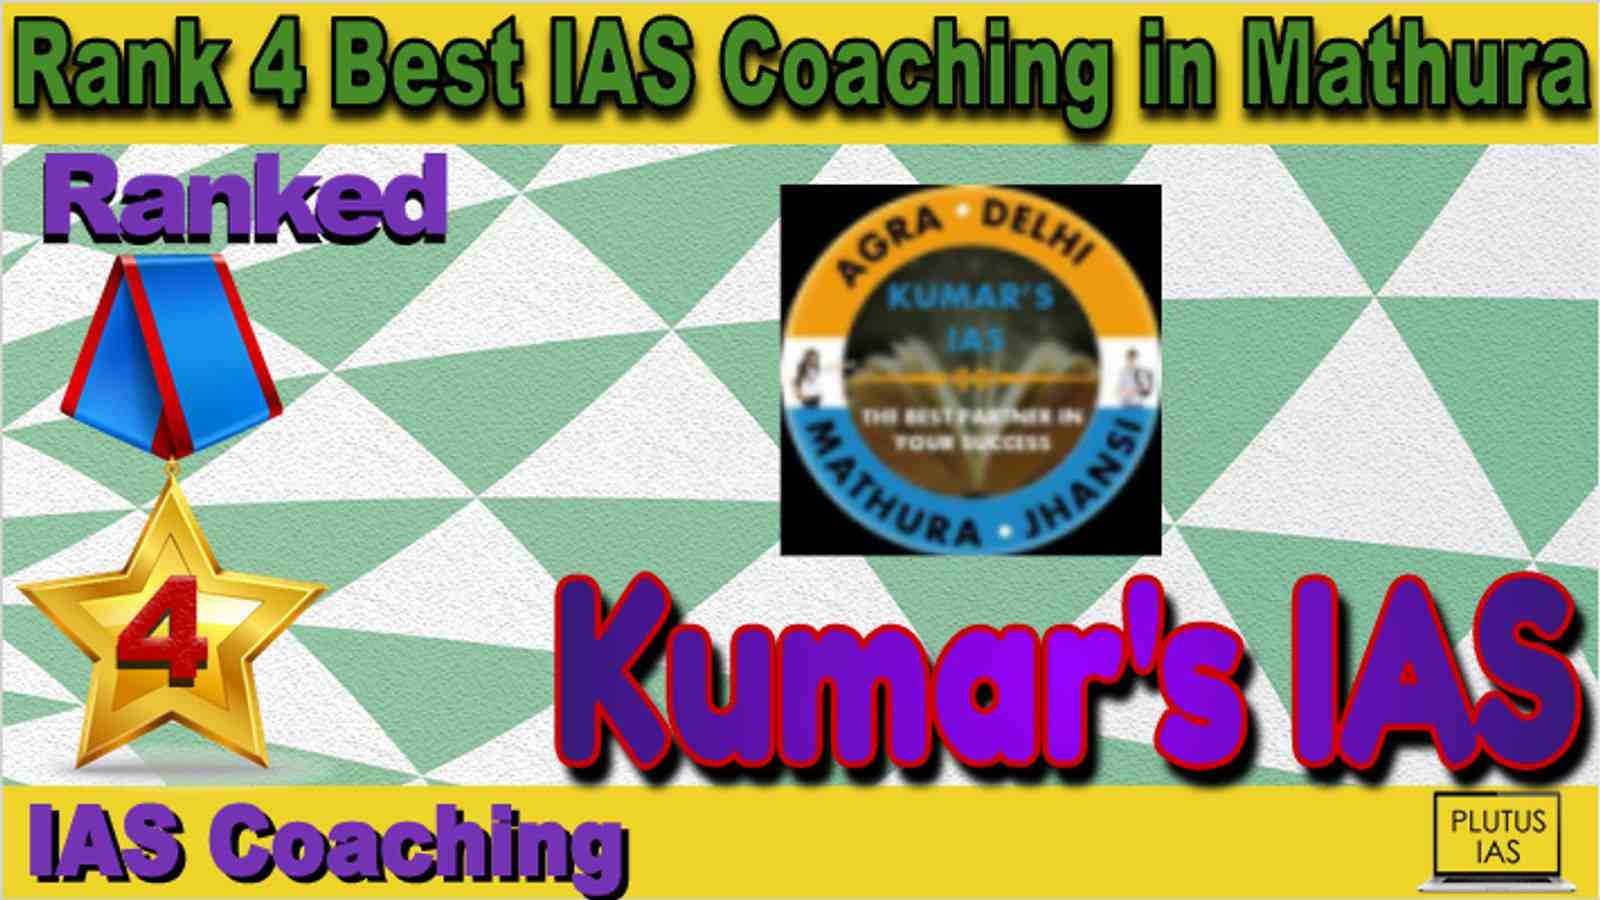 Rank 4 Best IAS Coaching in Mathura